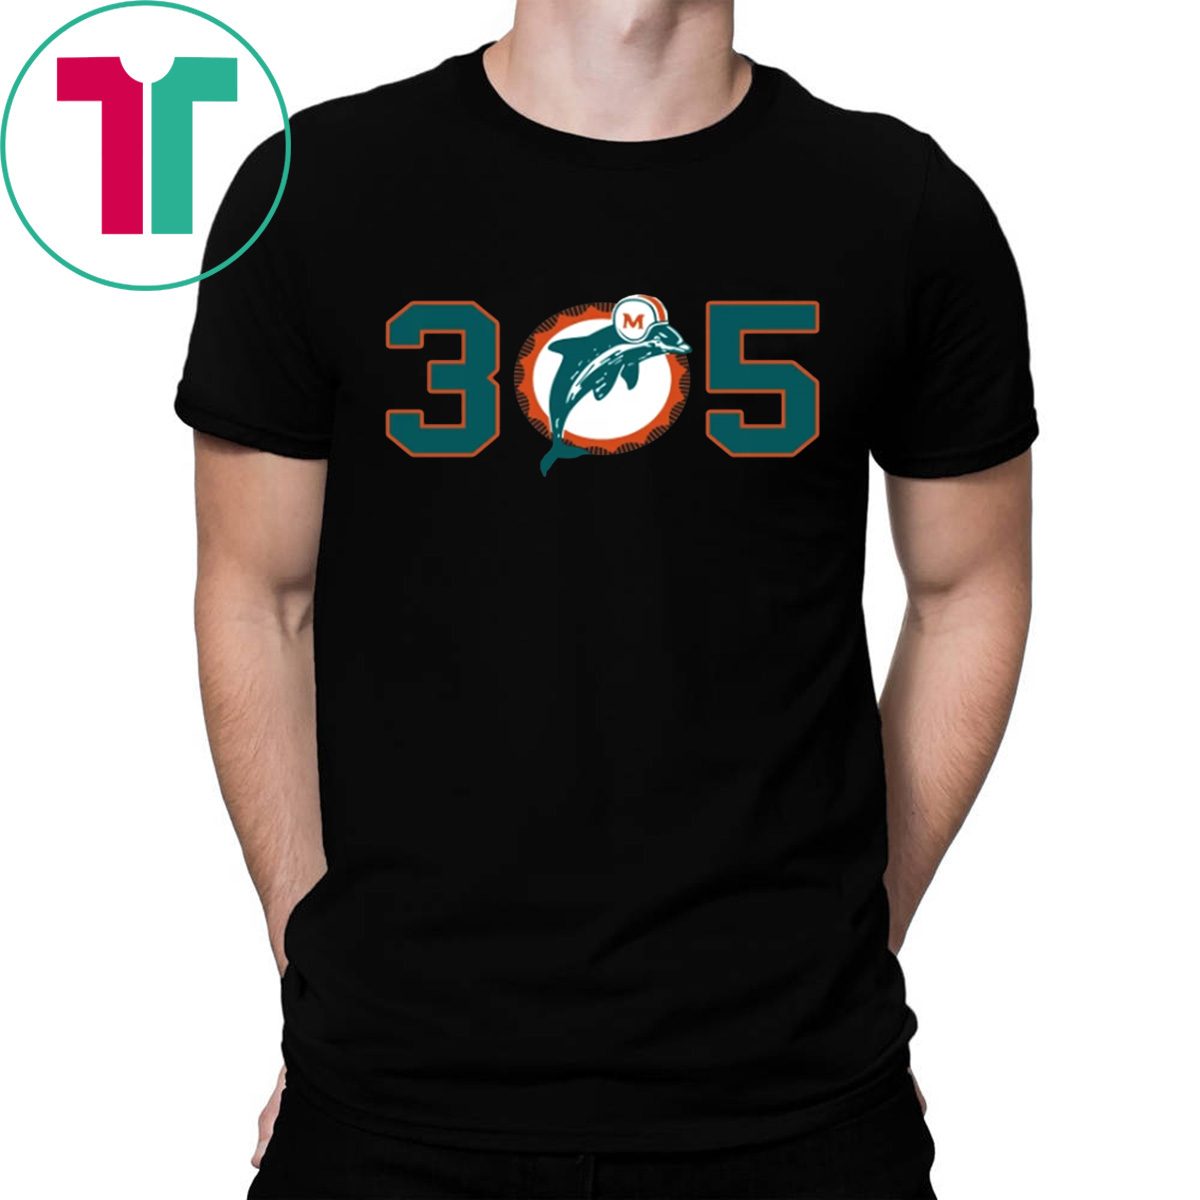 miami dolphins 305 shirt